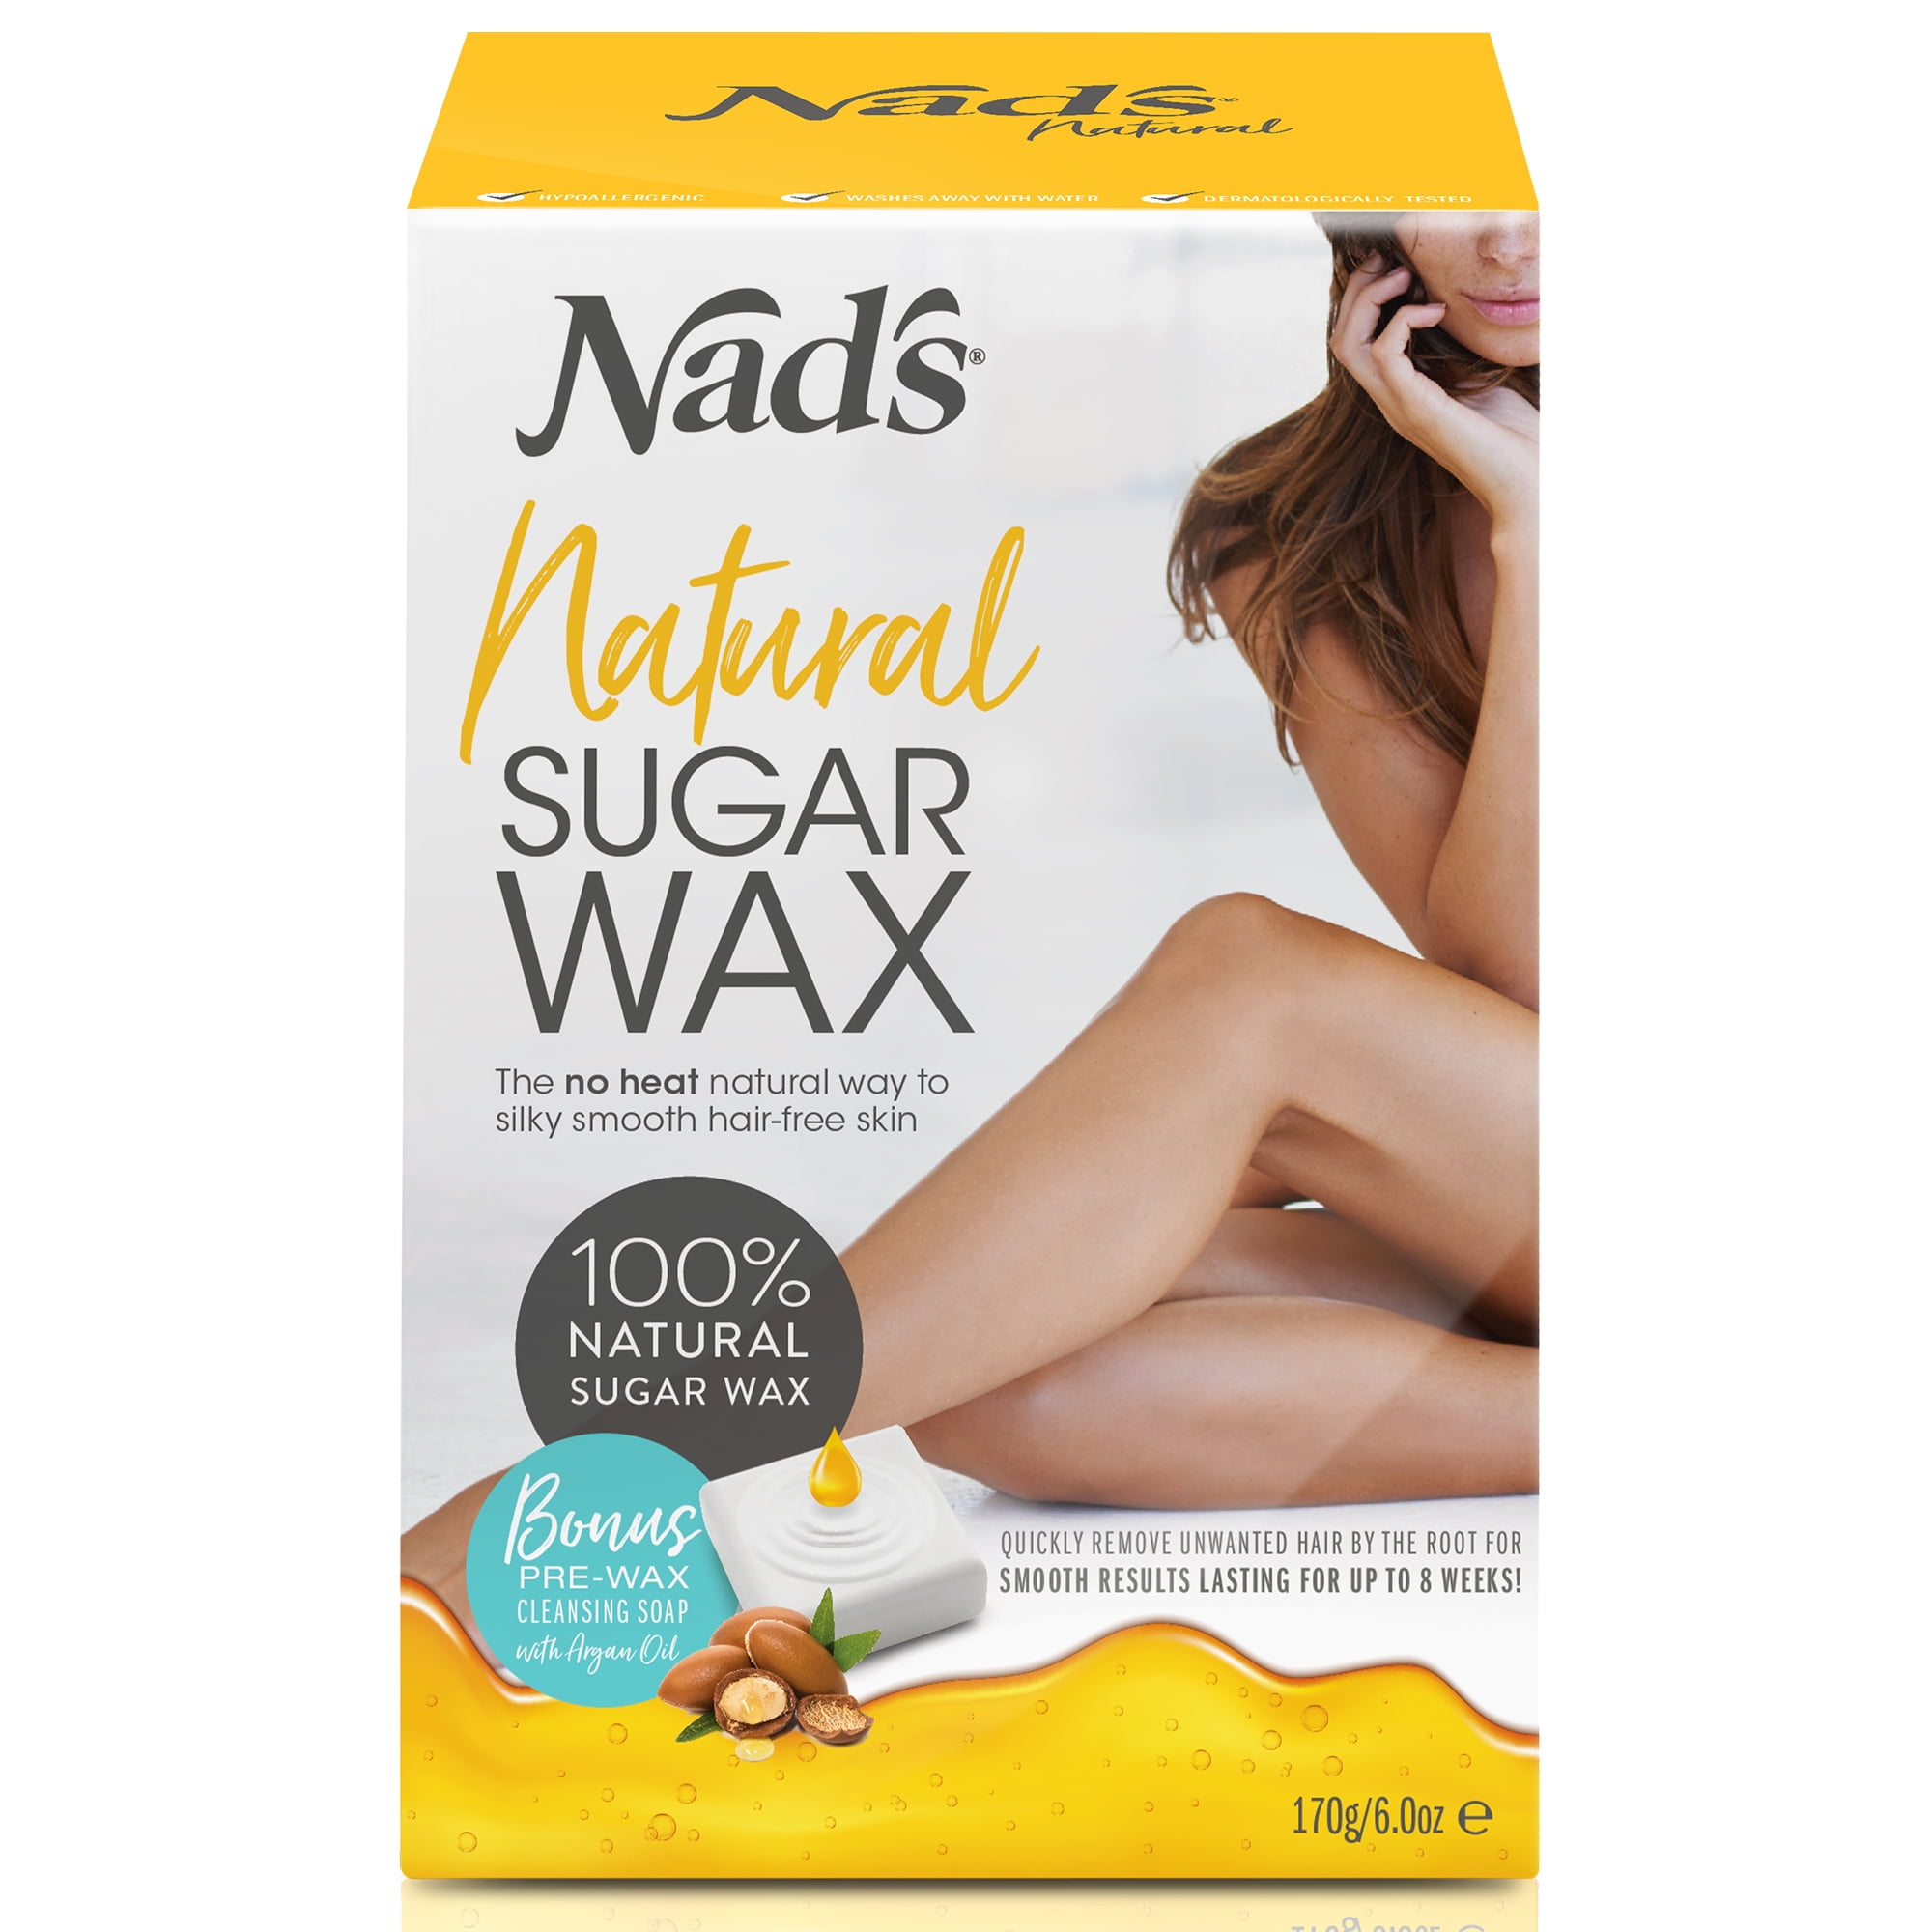 100% Natural Professional Hard Wax Warmer Kit With Removable Wax Basket –  Natural Way Products Inc.